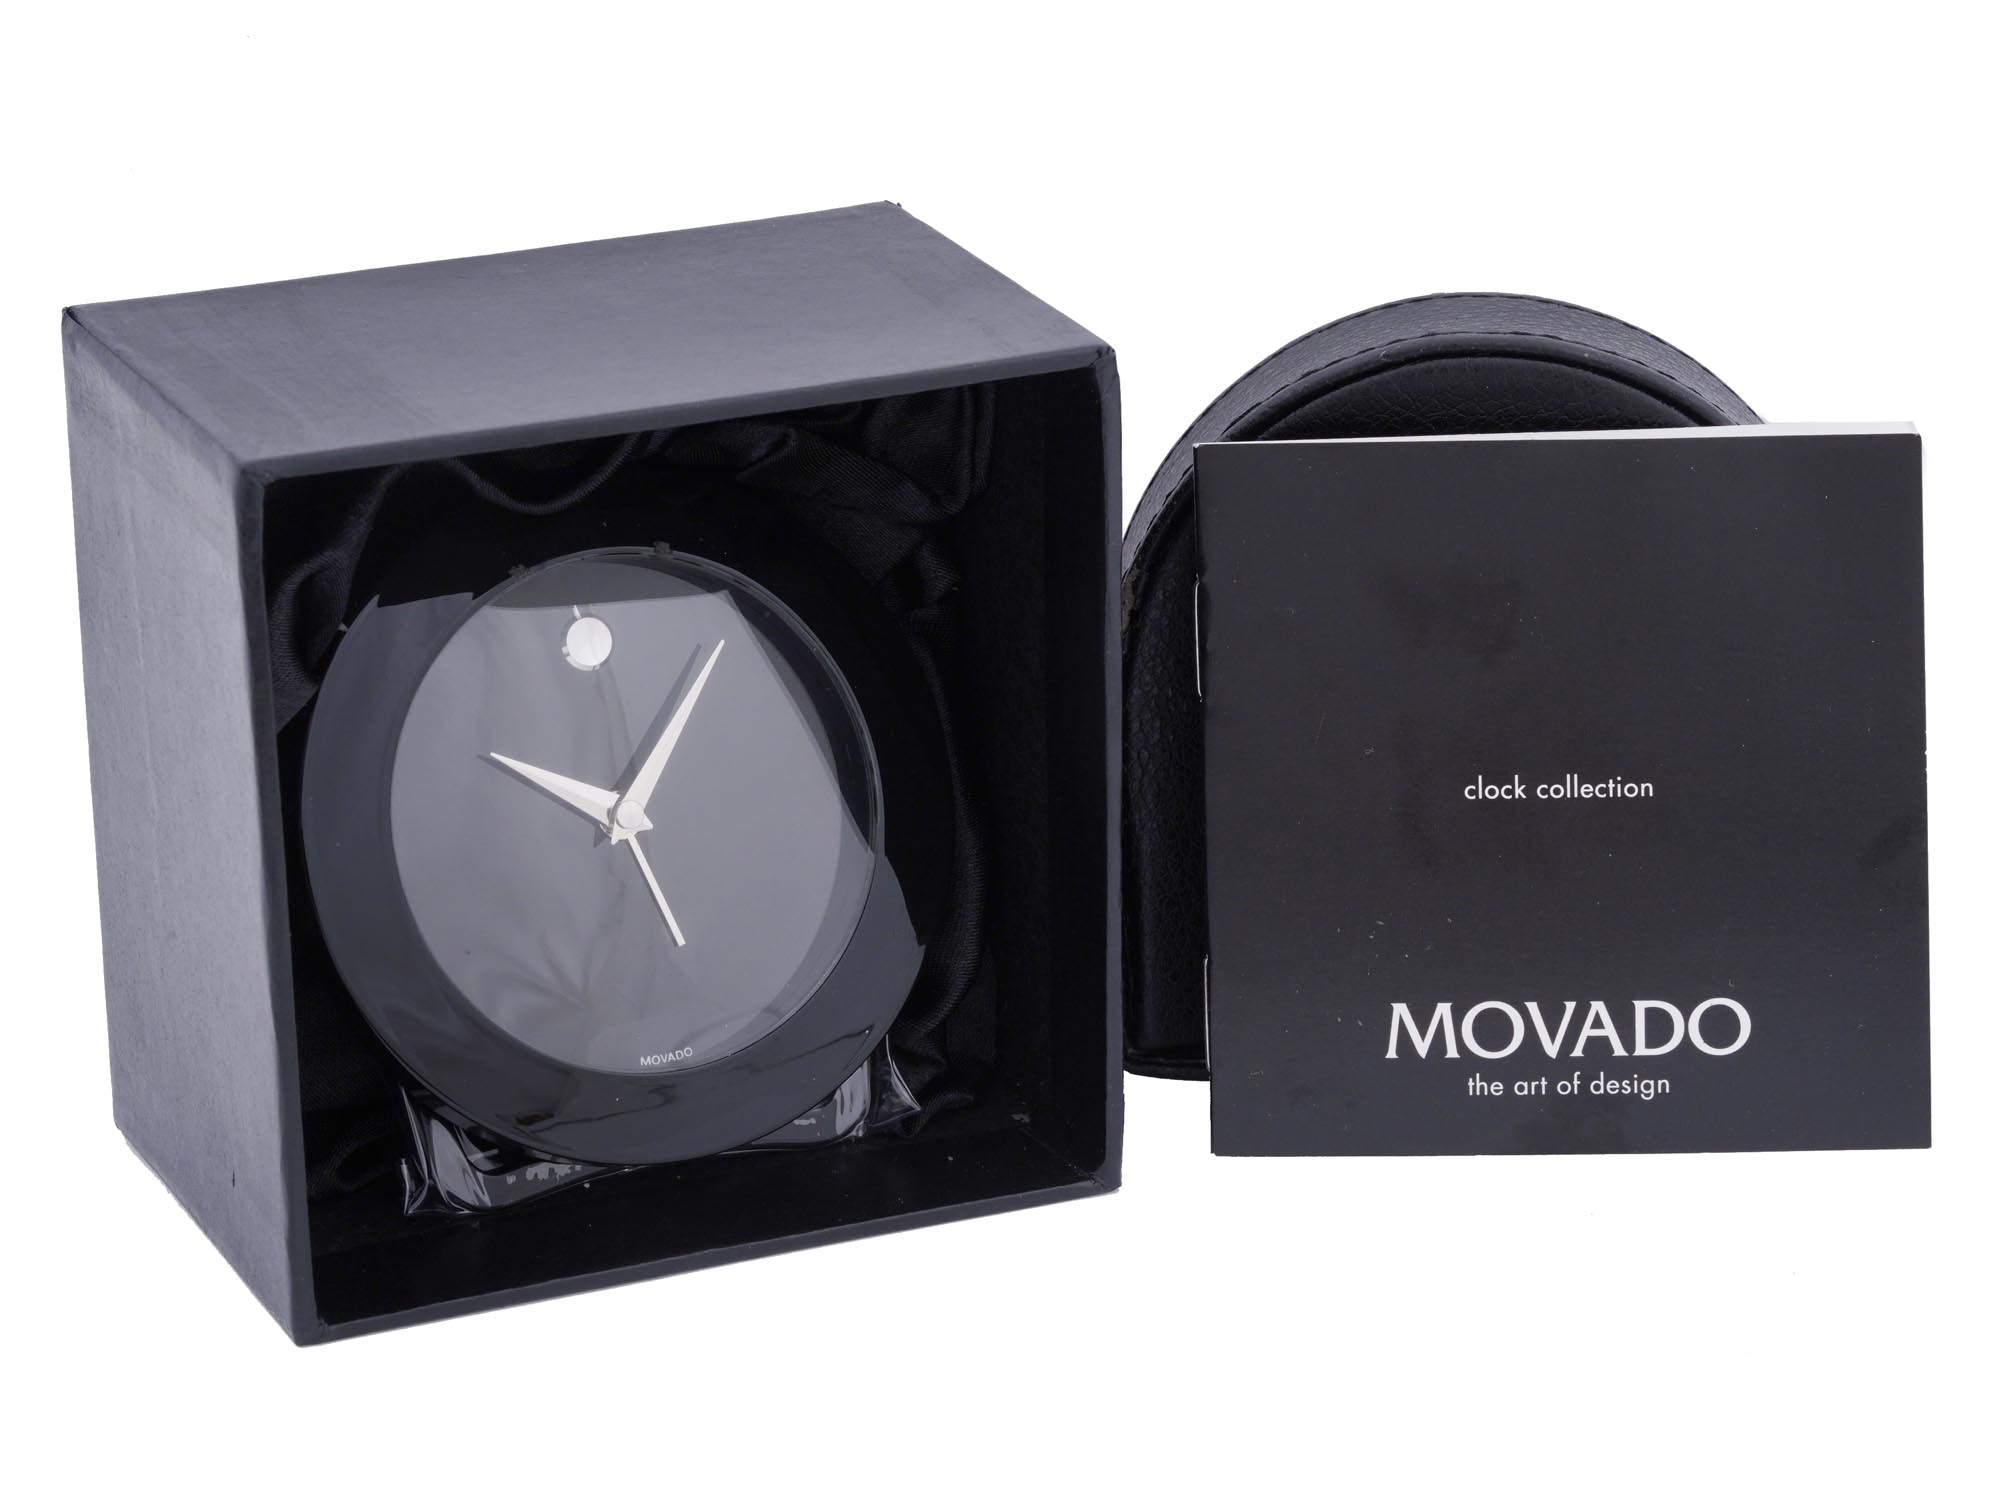 MOVADO TRAVEL ALARM CLOCK WITH ORIGINAL CASE PIC-0